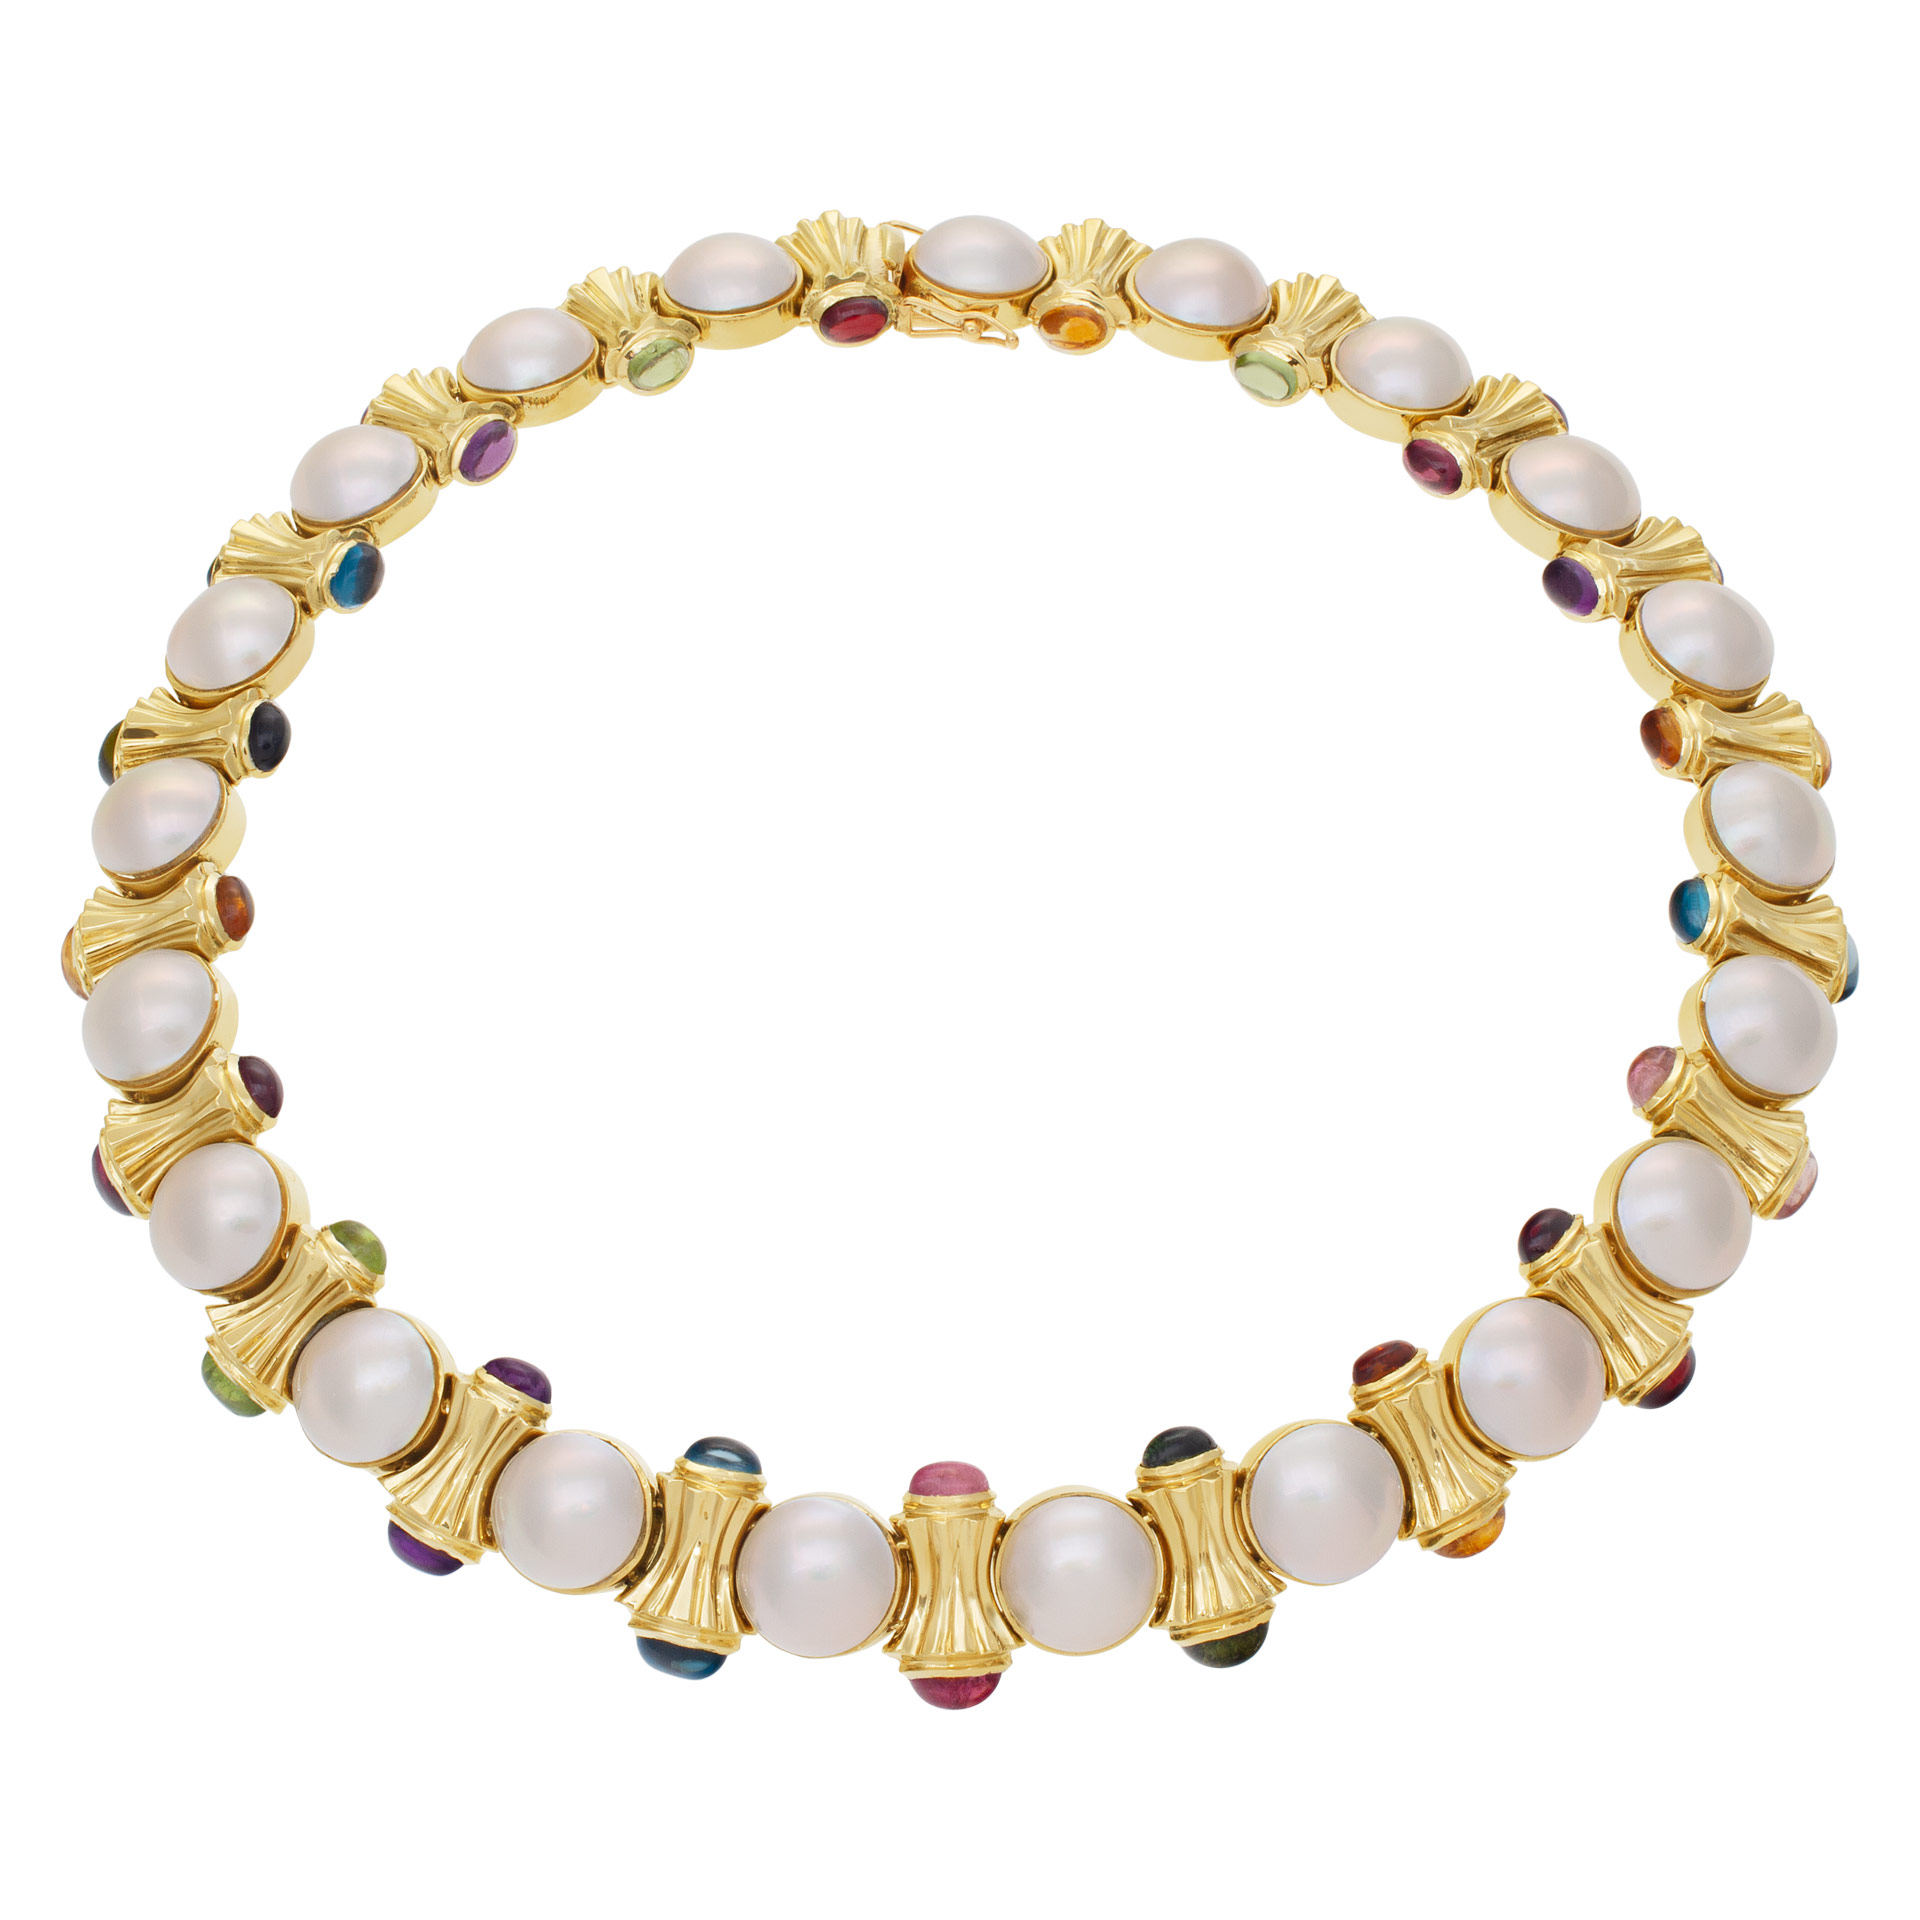 Mabe pearls & oval cut cabochon semi precious colored stones choker necklace set in 14K gold.